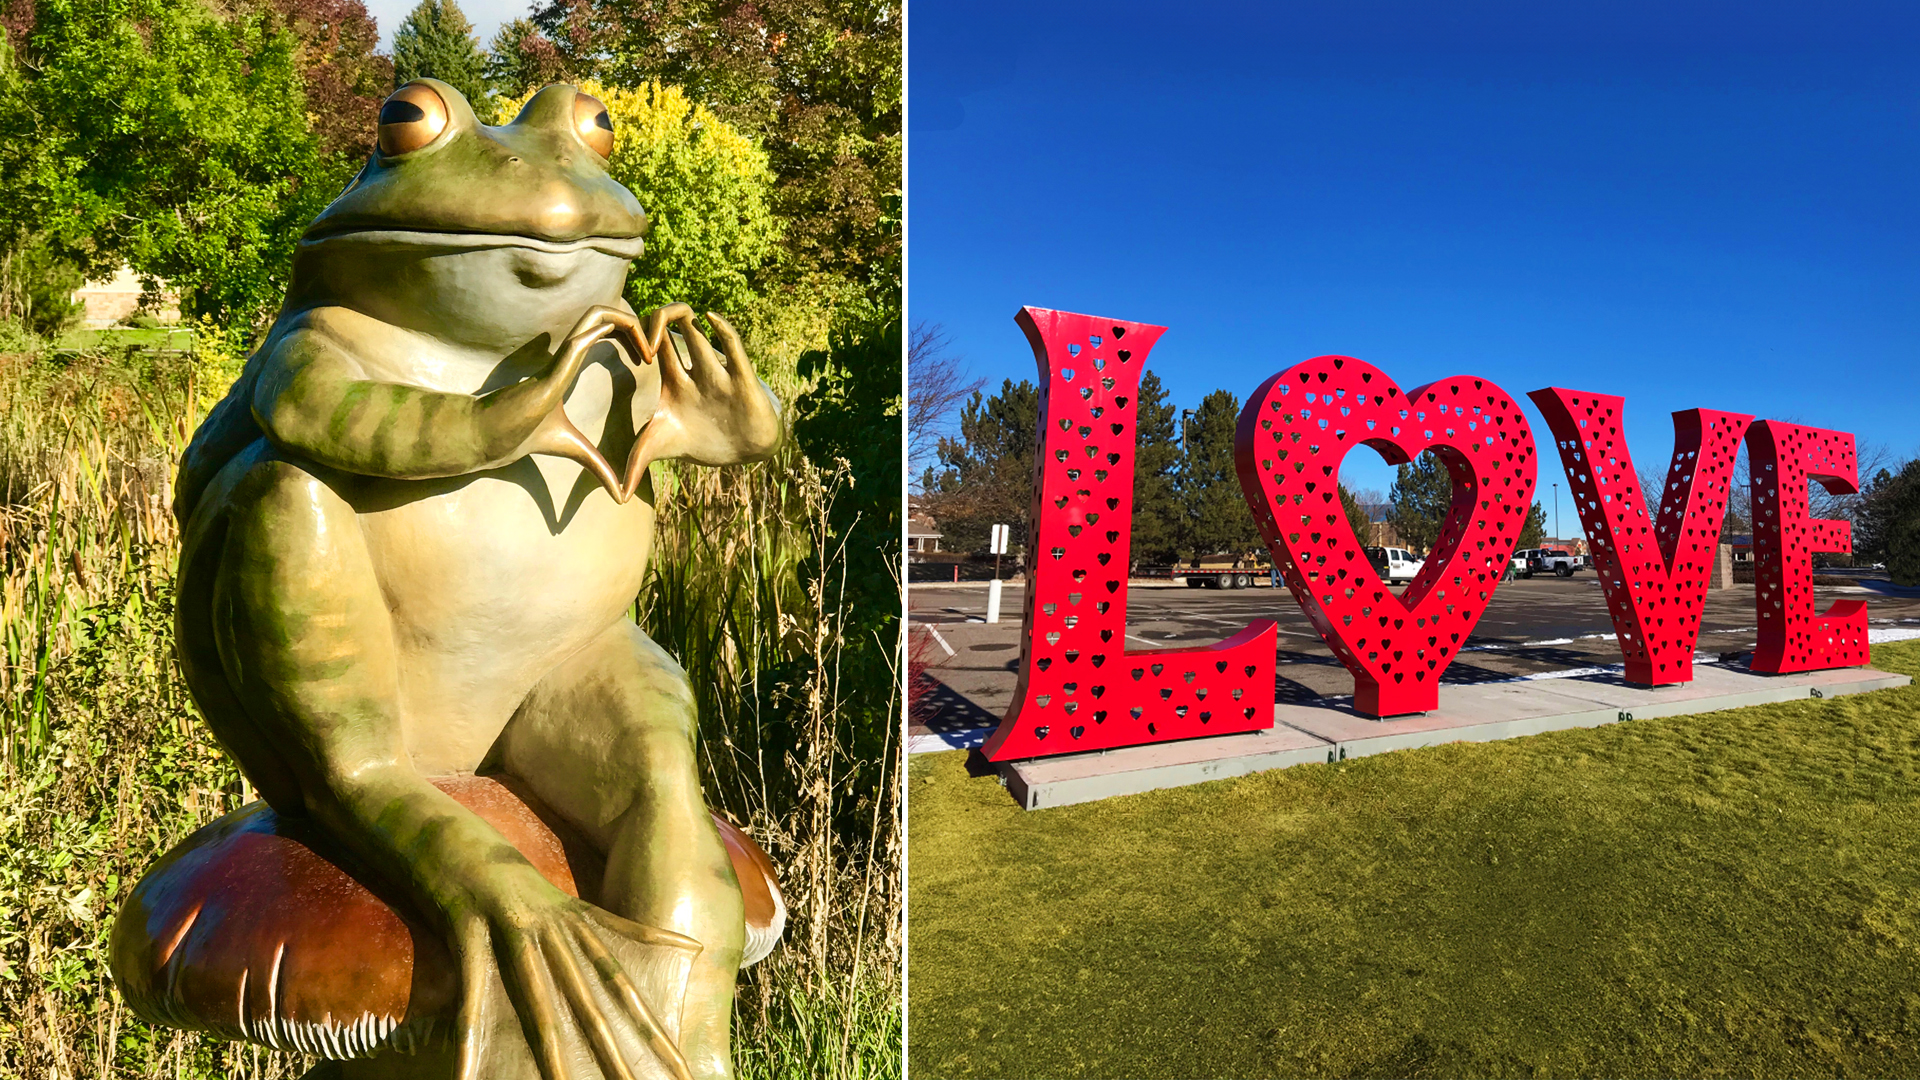 A sculpture of a frog at Benson Sculpture Garden and the Love Lock sculpture at teh Loveland Visitor Center.